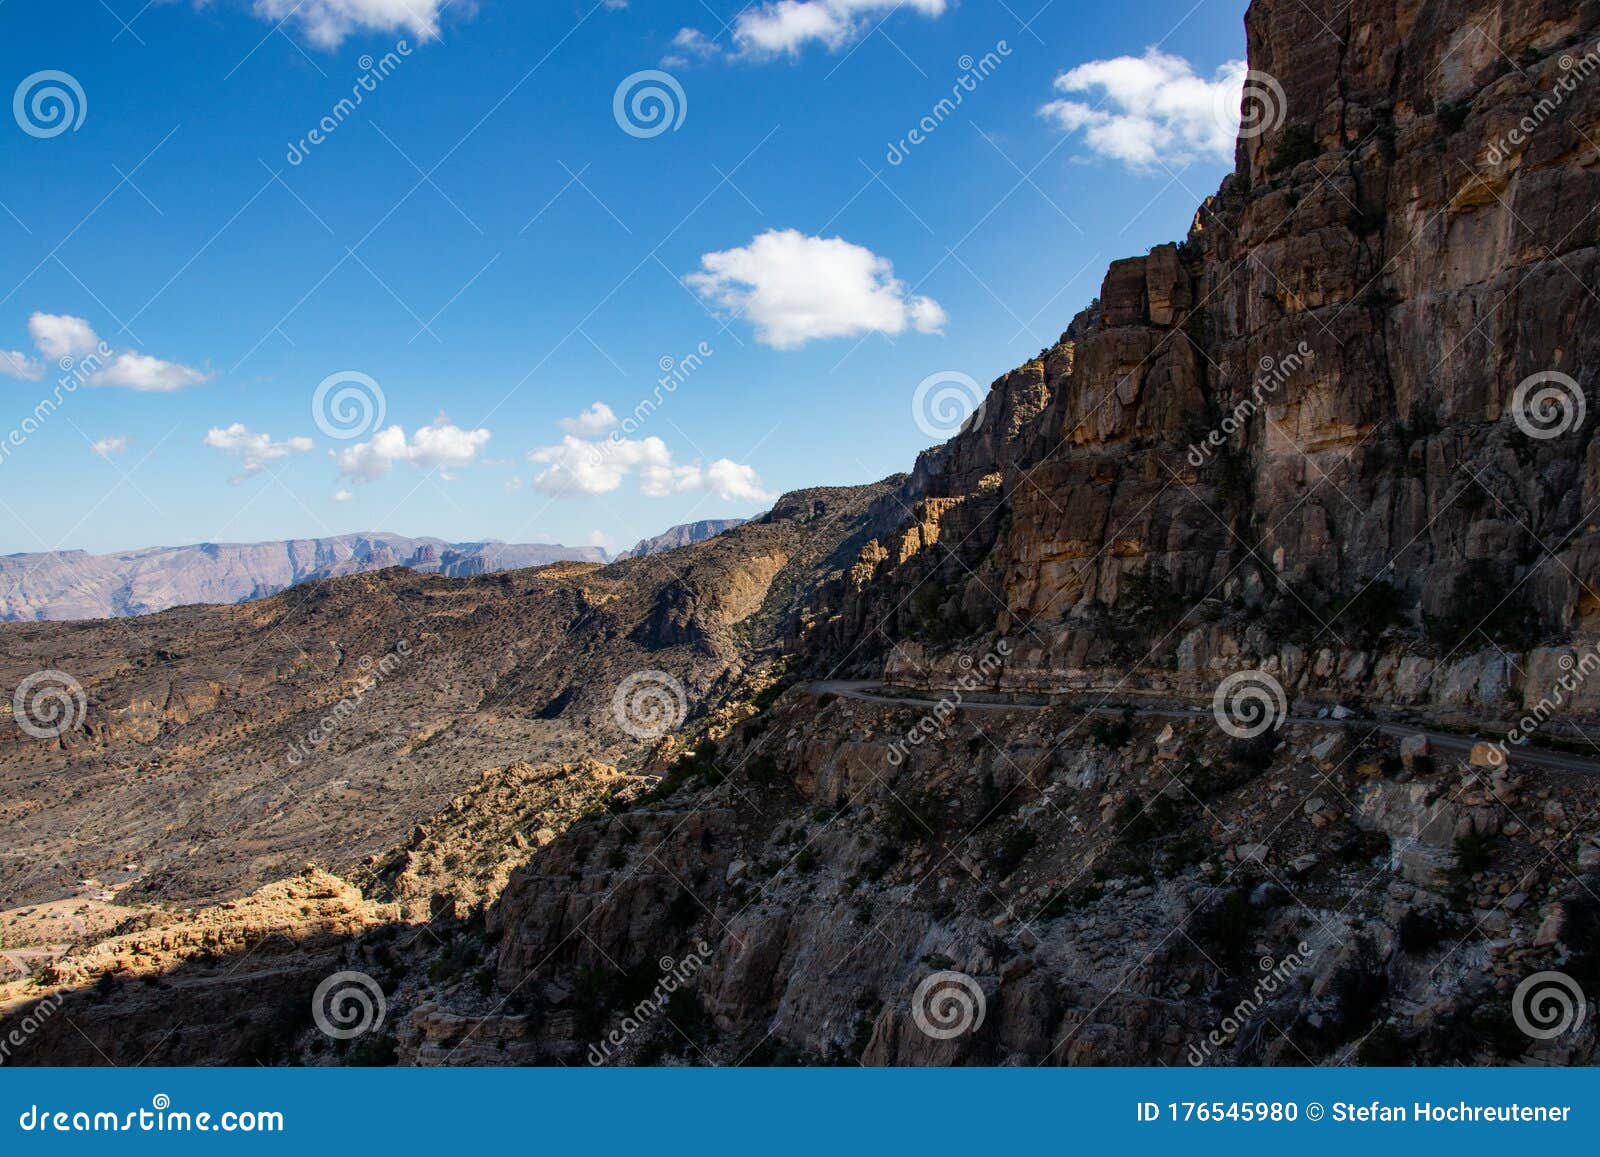 mountain and valley view along wadi sahtan road in al hajir mountains between nizwa and mascat in oman